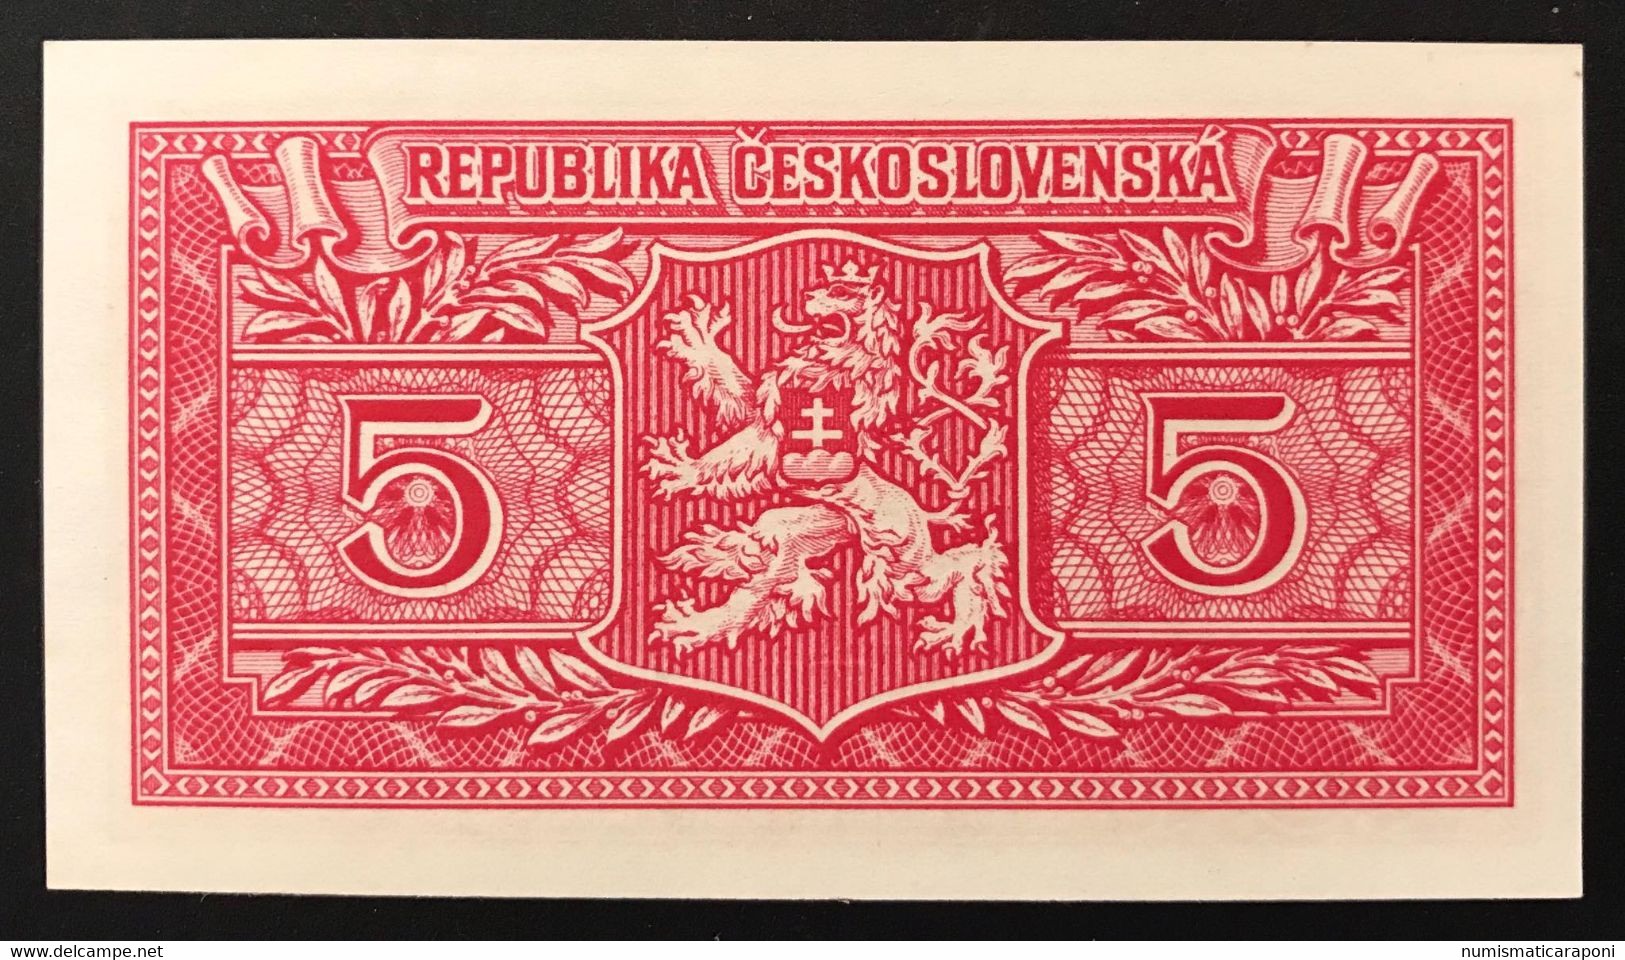 Ceskoslovenska CECOSLOVACCHIA  Czechoslovakia 5 KORUN 1949 UNC Pick#68a Lotto 3471 - República Checa